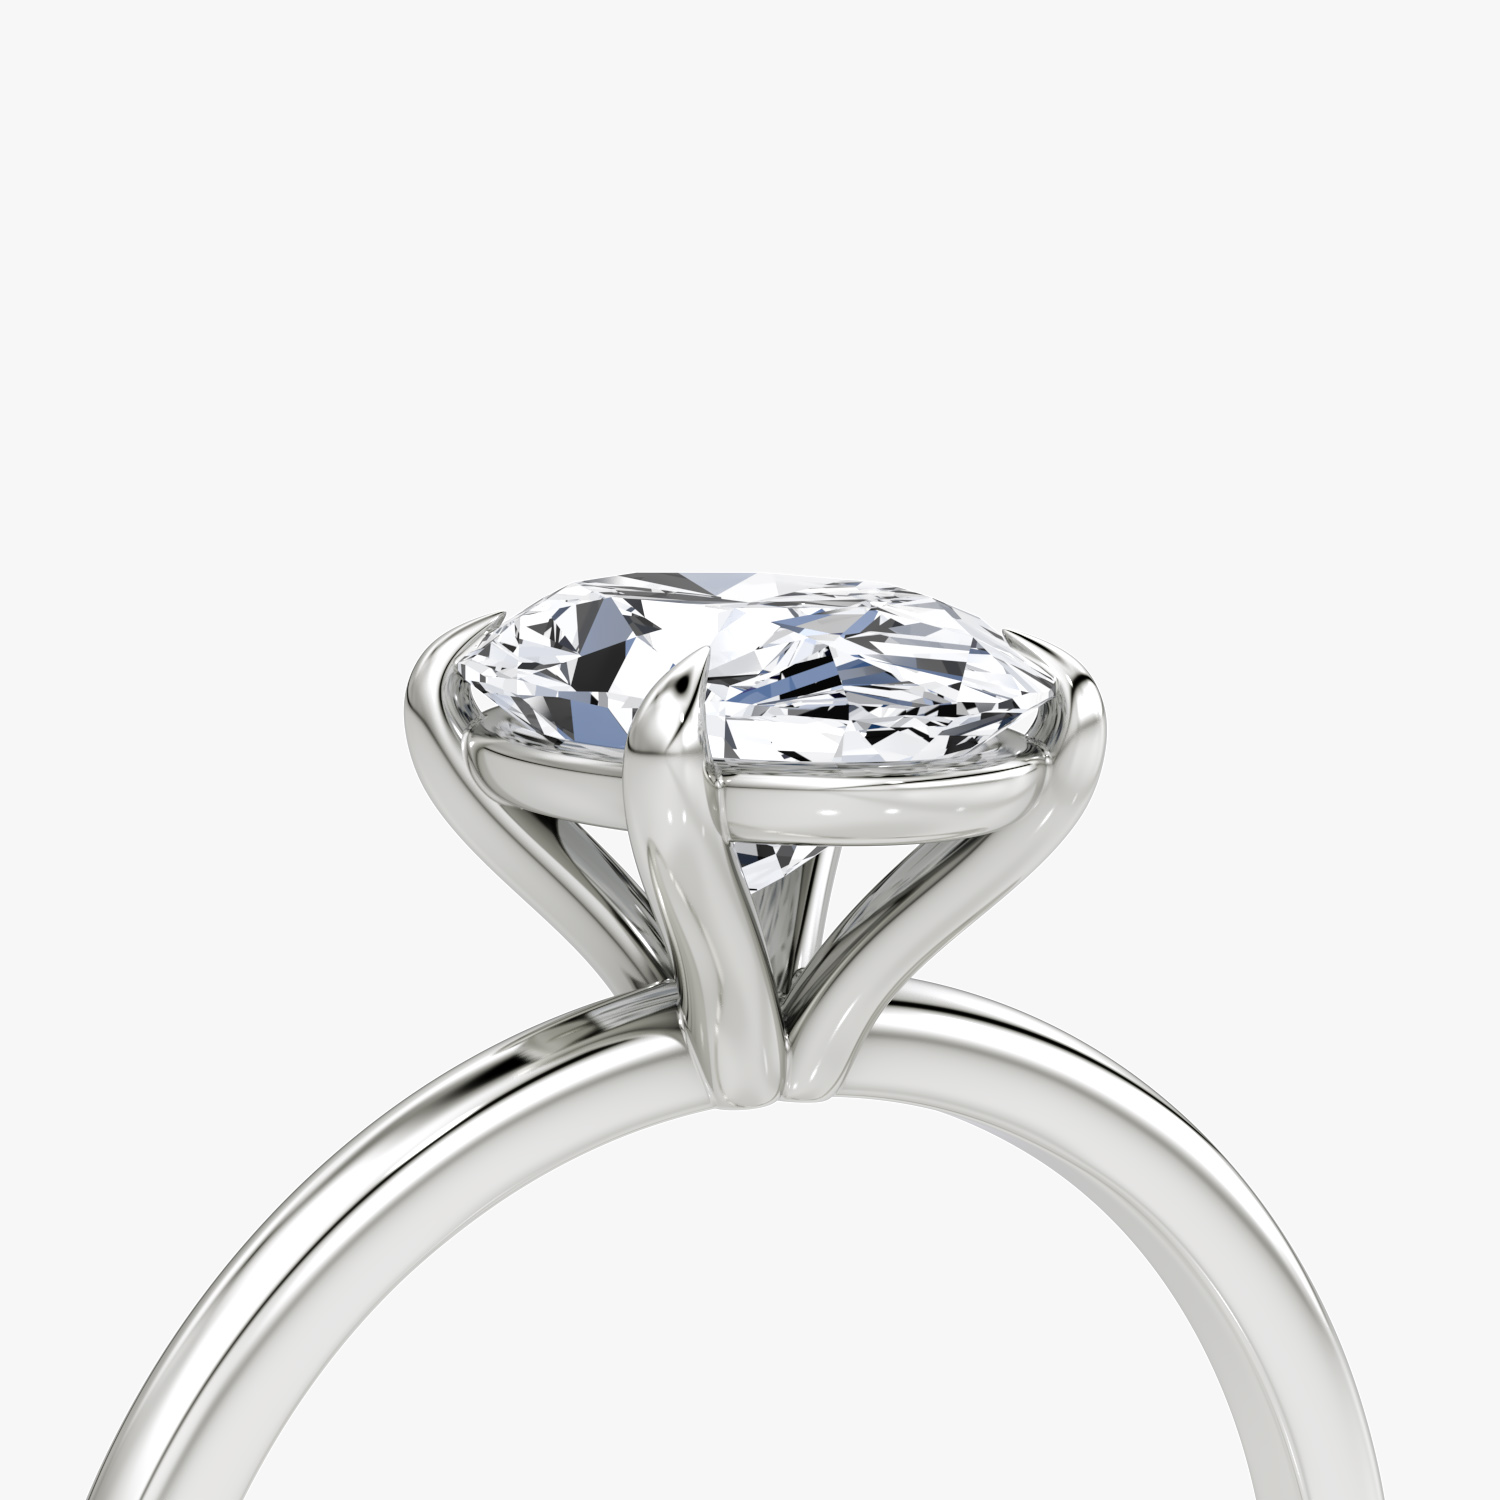 0.5ct diamond engagement ring in white gold | KLENOTA